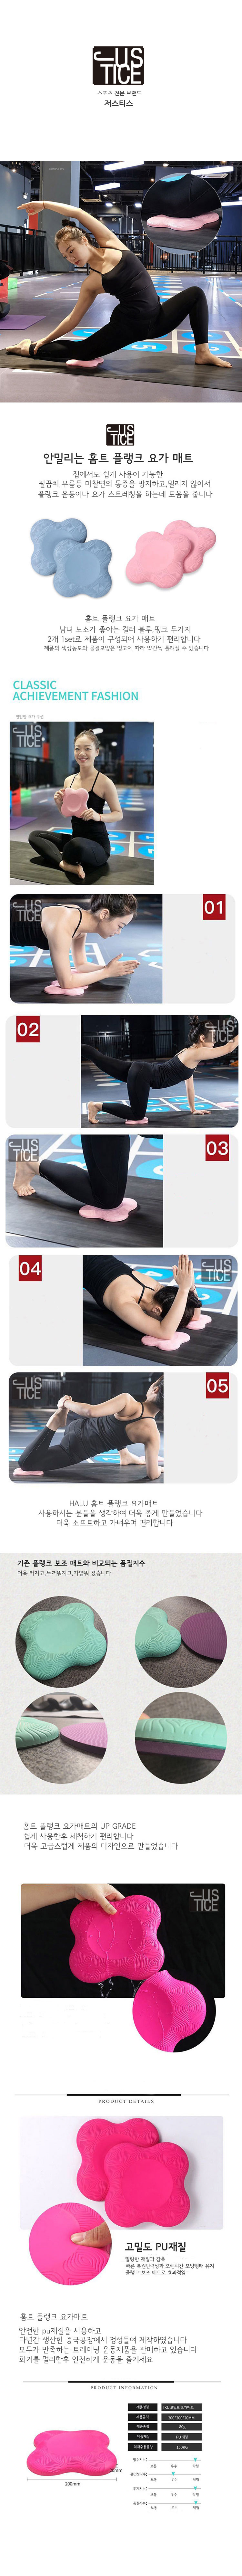 yogamat2set.jpg